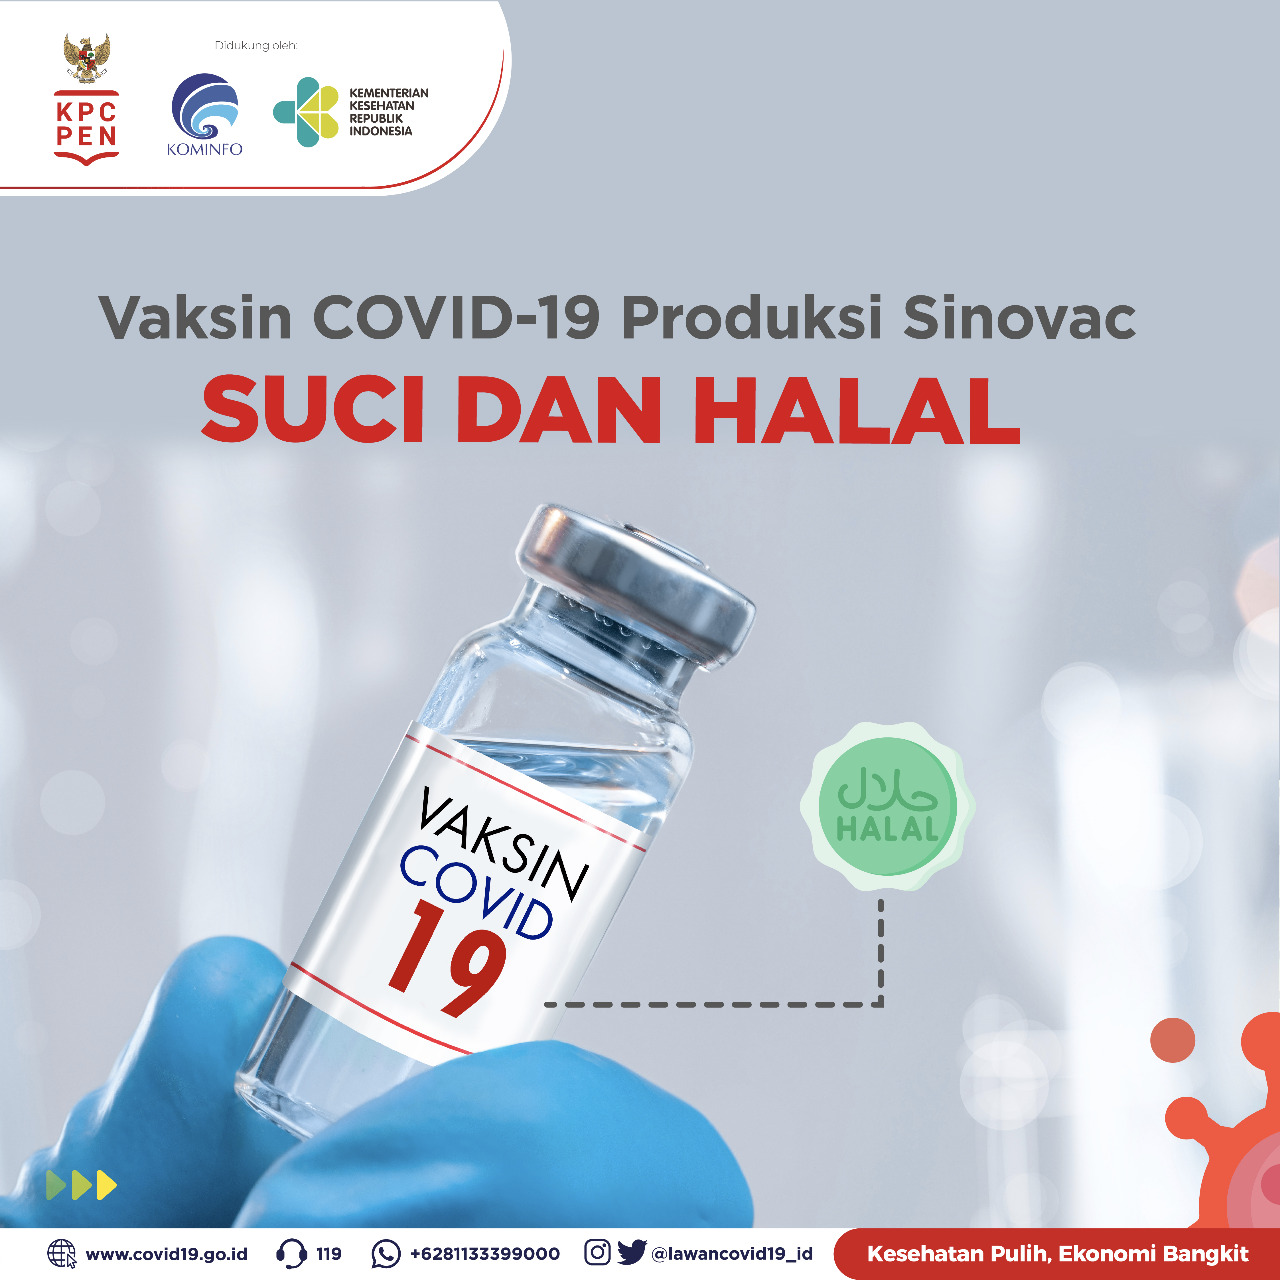 You are currently viewing Vaksin COVID-19 Produksi Sinovac Suci dan Halal